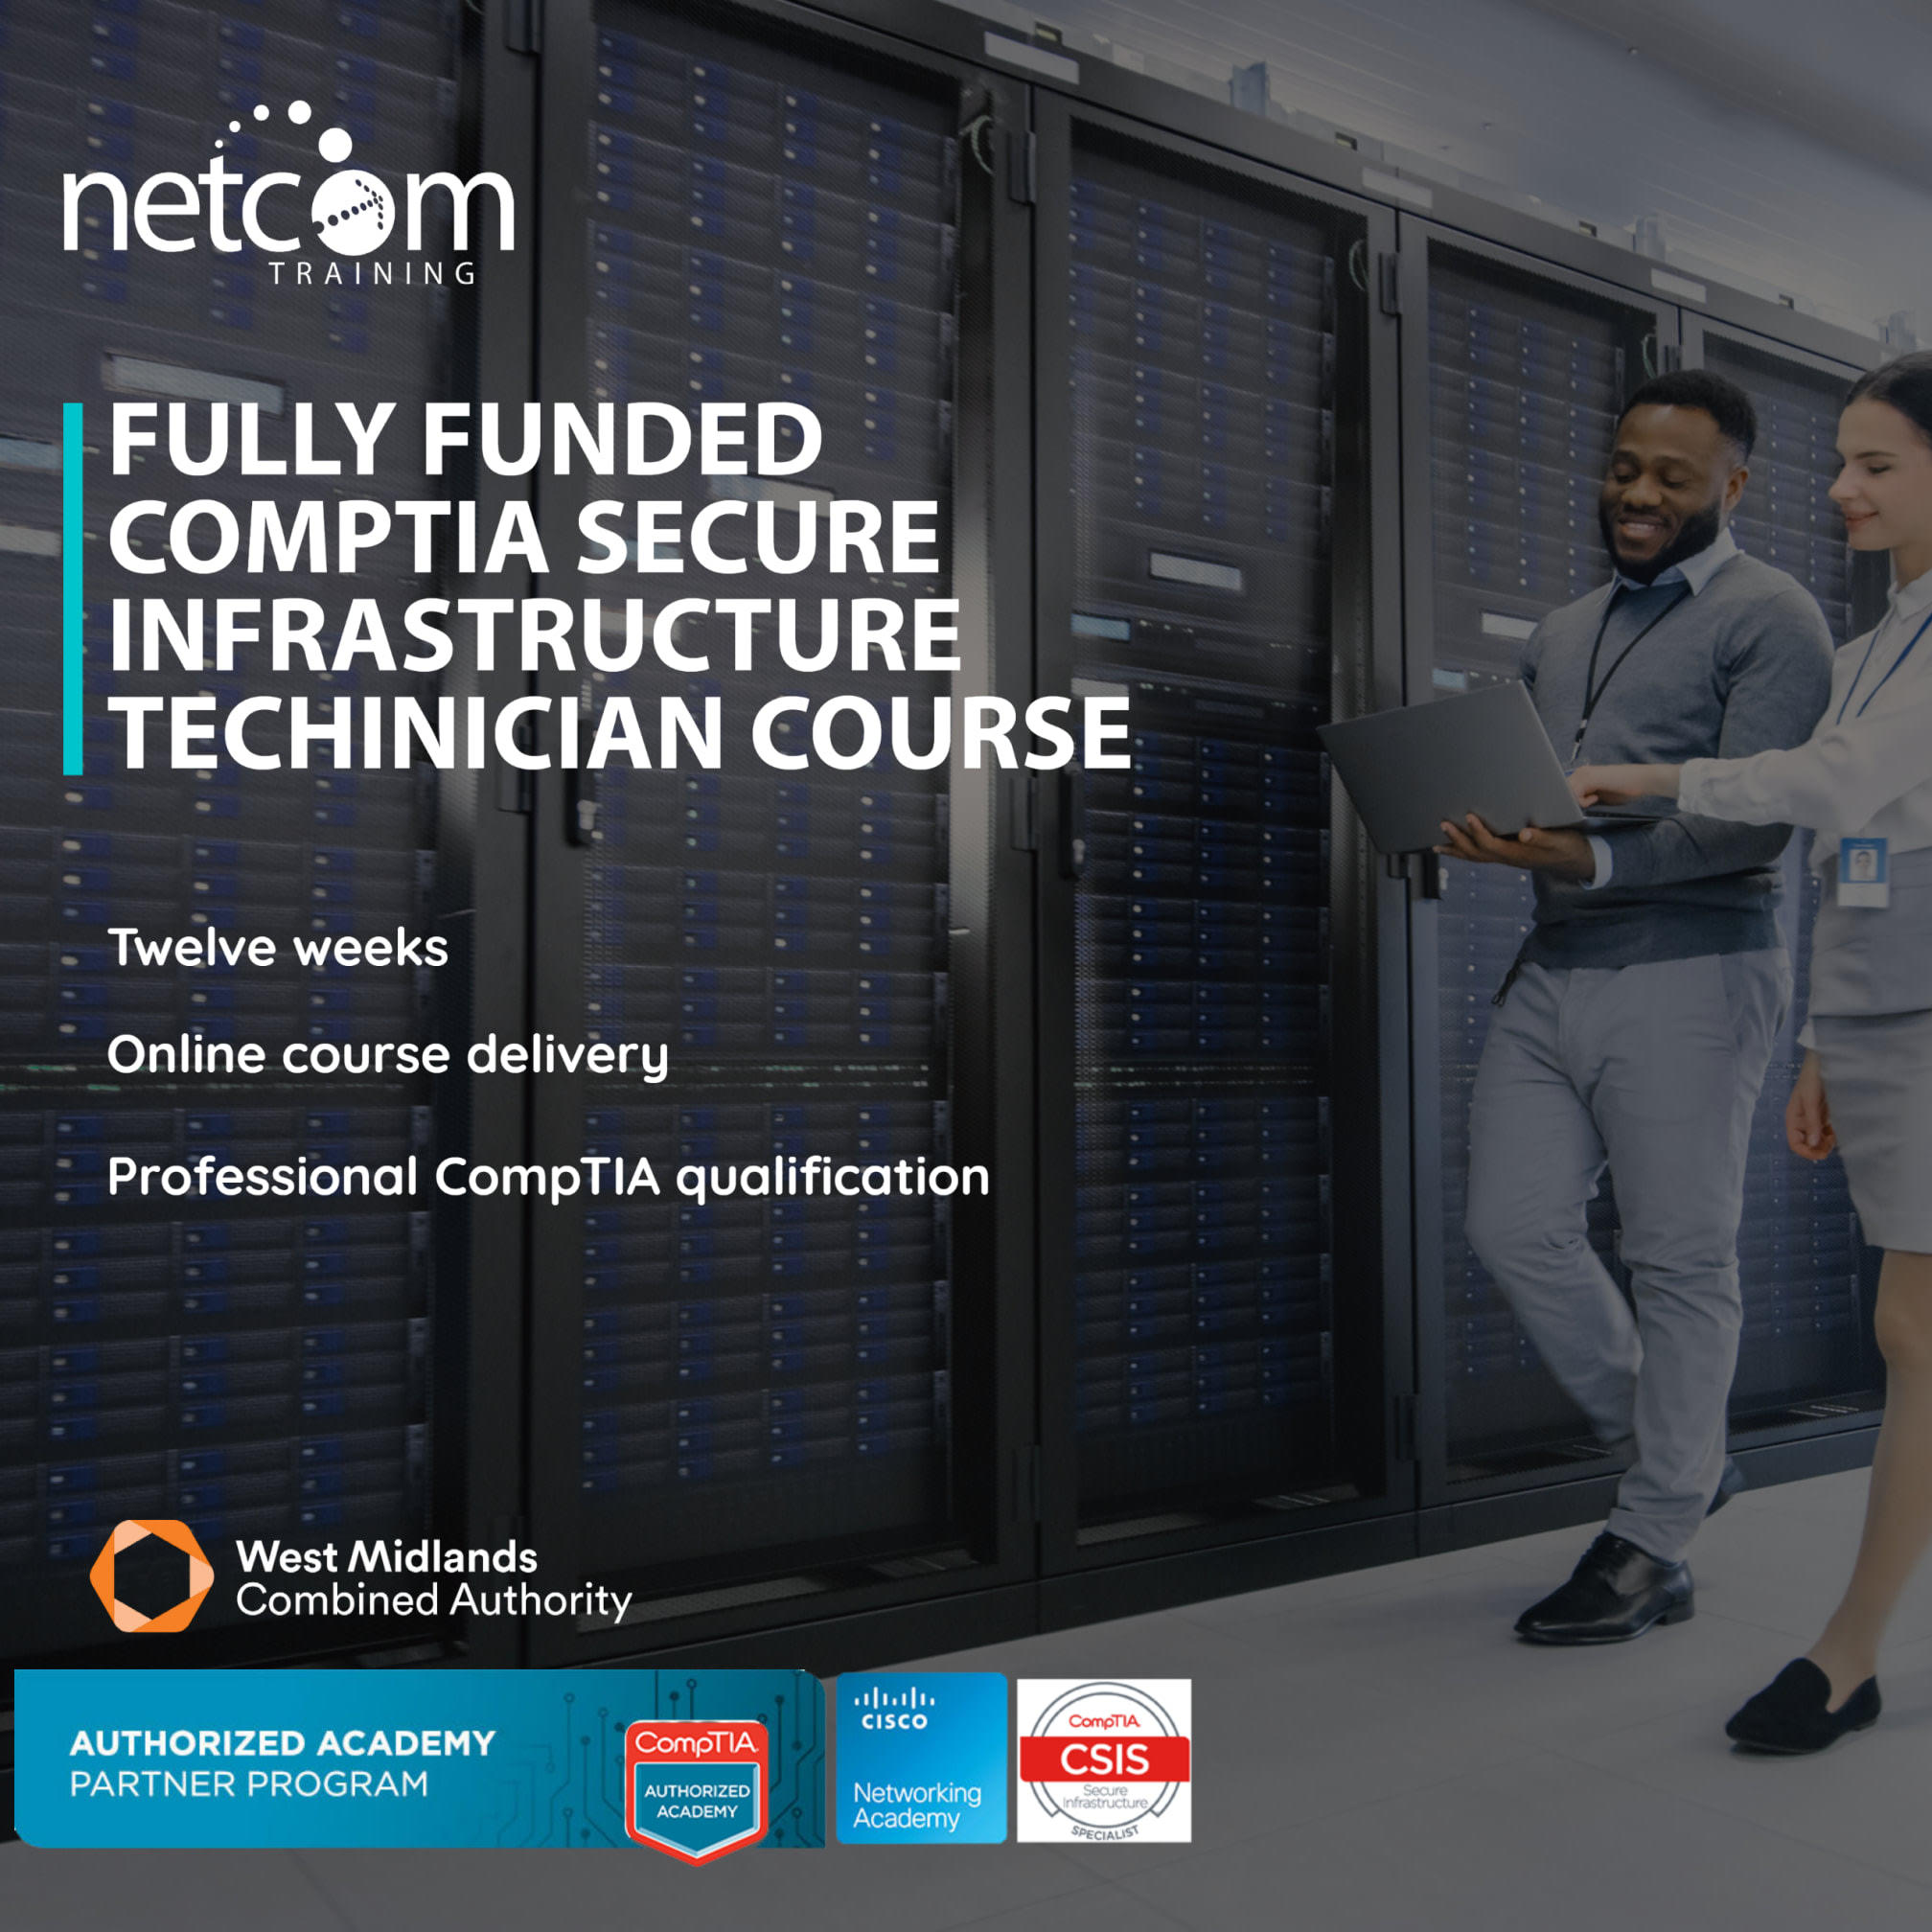 Images Netcom Training Ltd